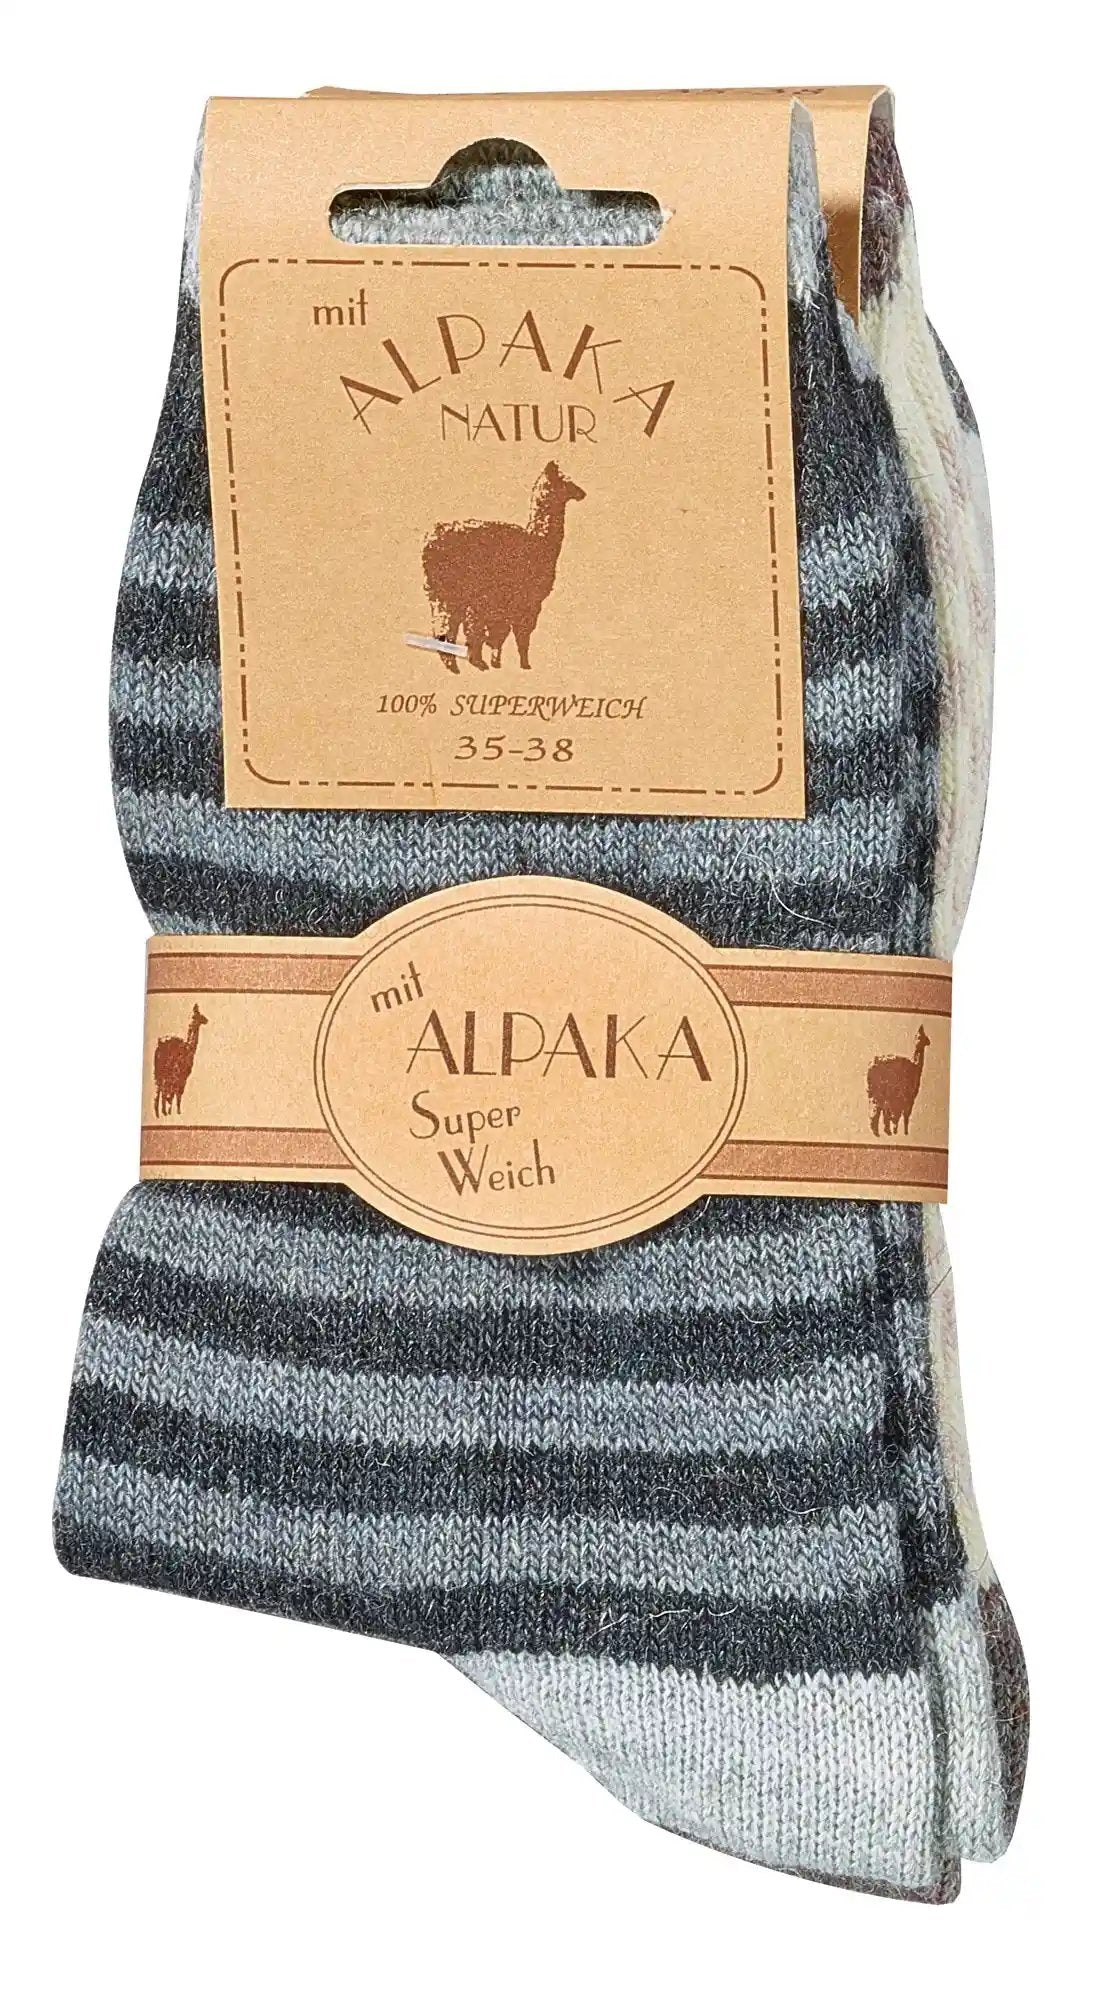 2 pairs of alpaca socks with alpaca wool for children, teenagers, women